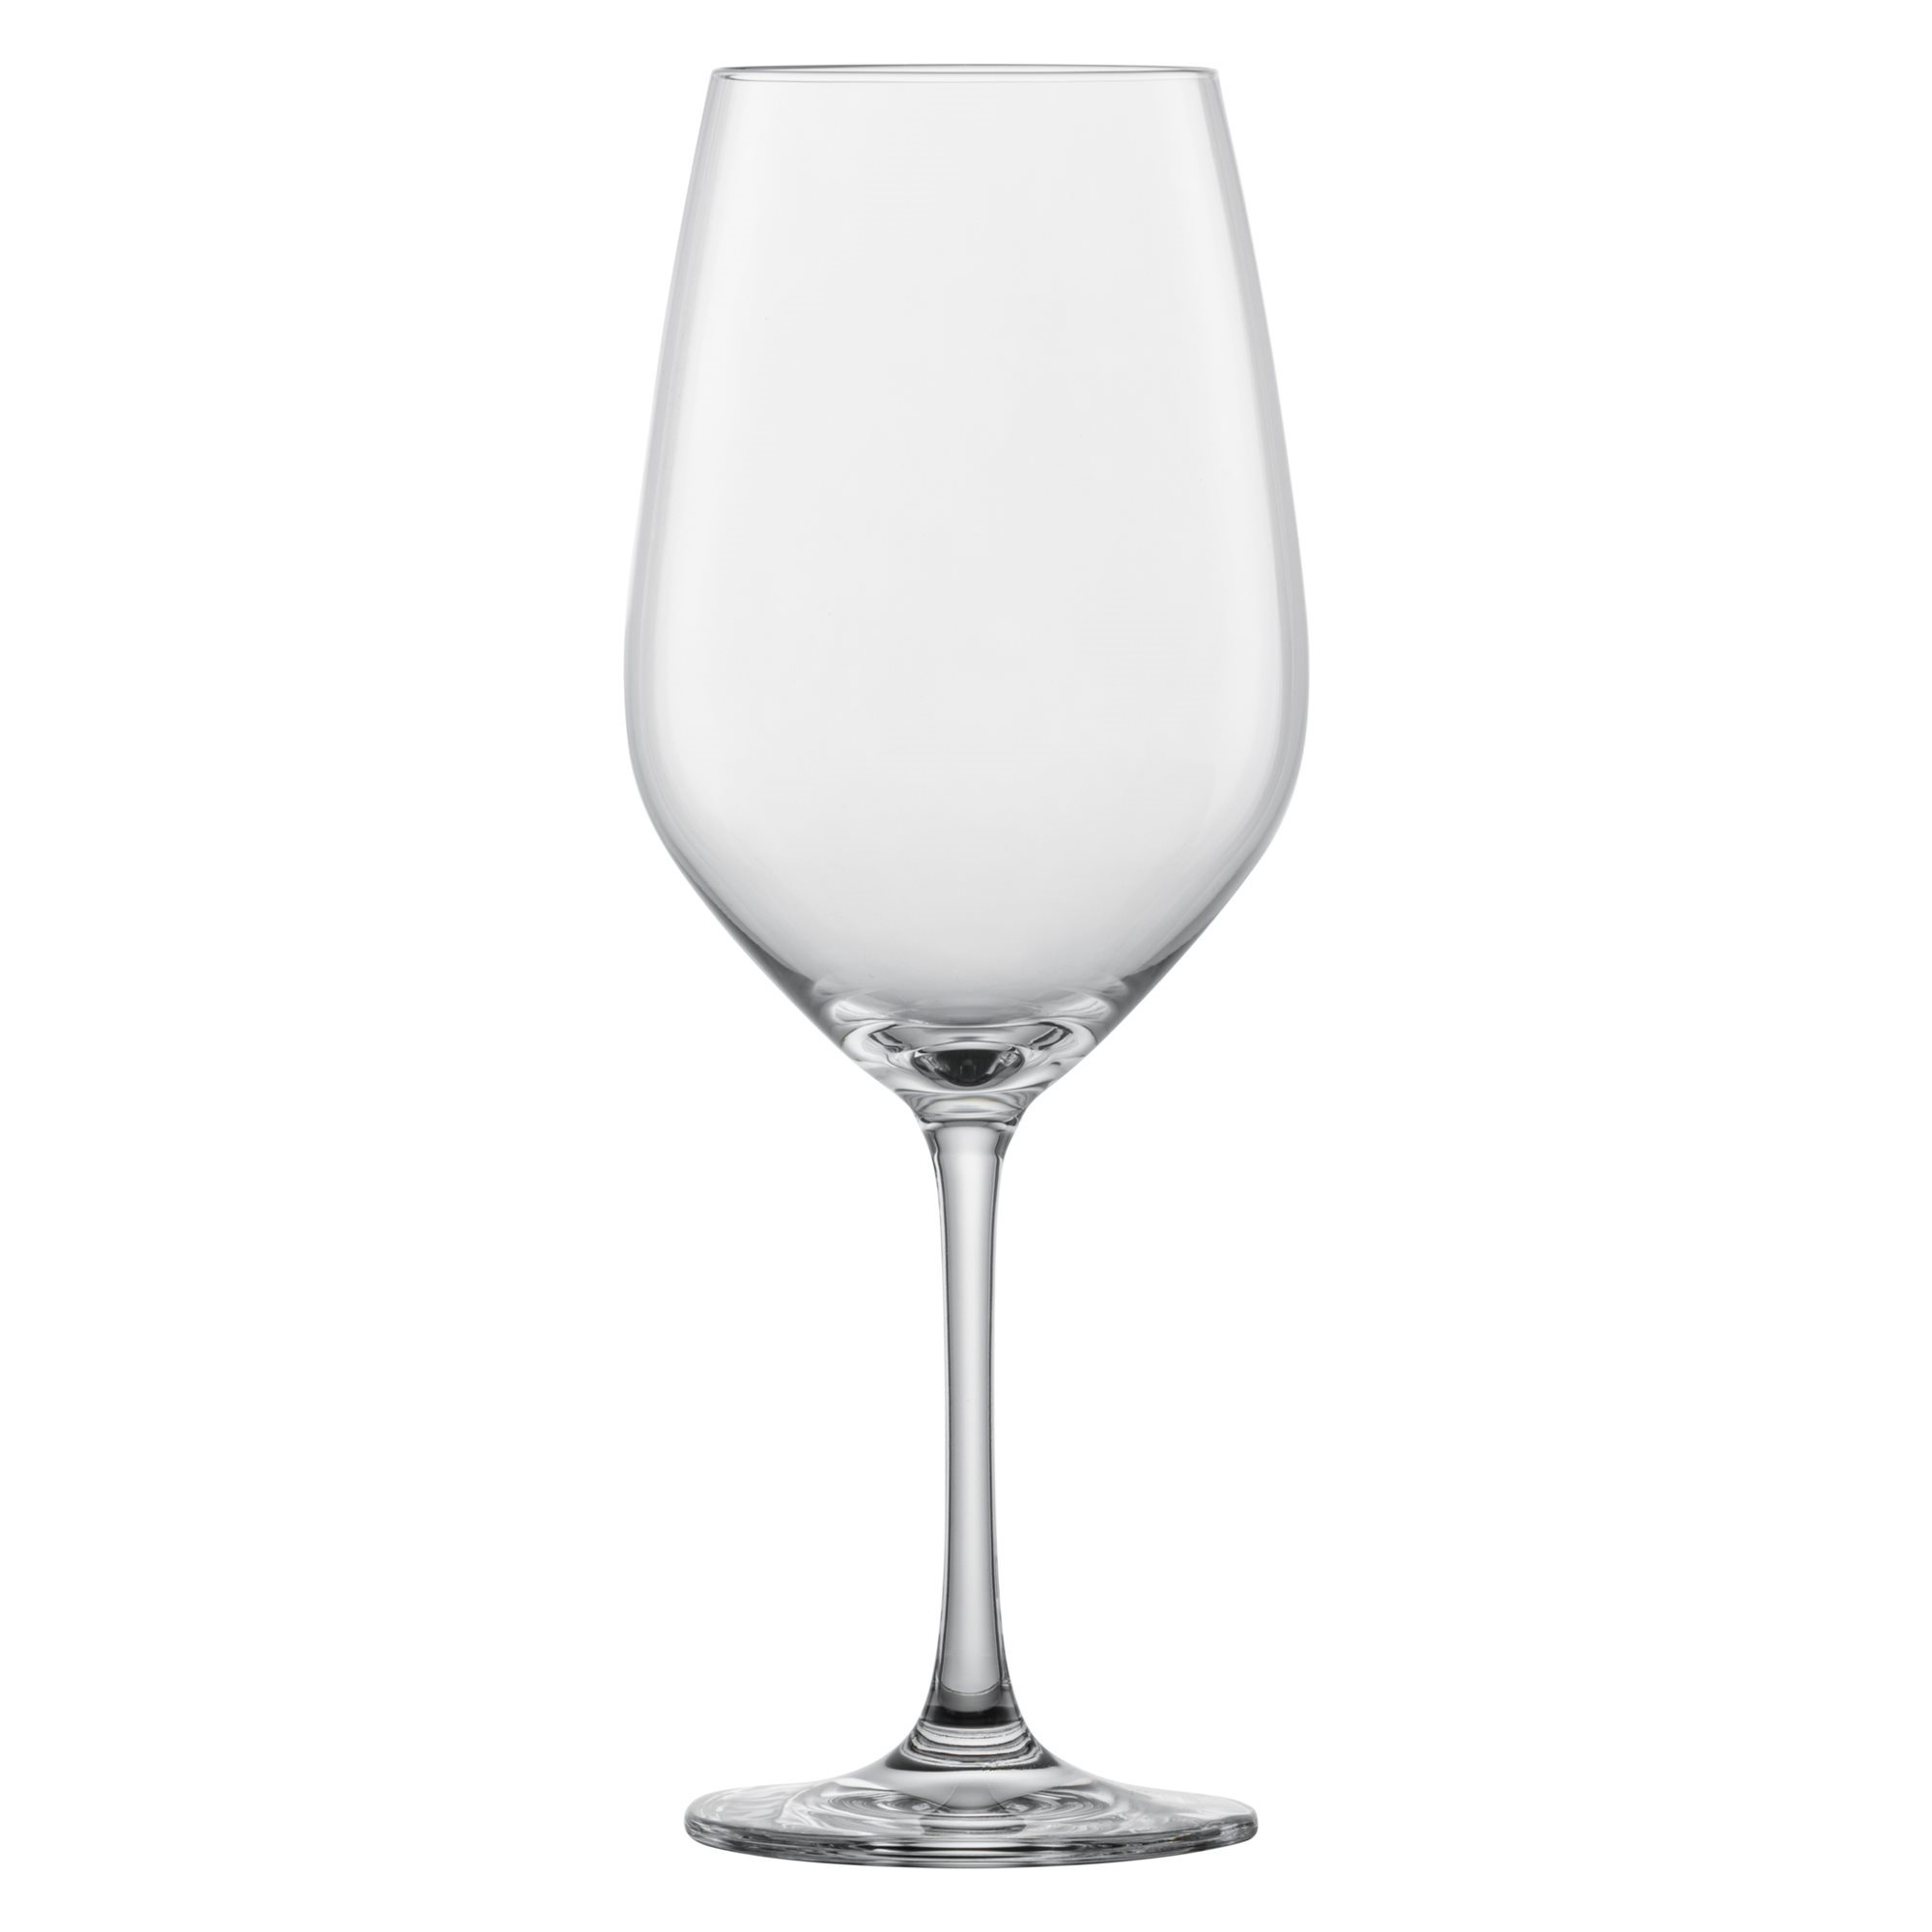 6-pcs wine glass set, 504 ml, "Vina" - Schott Zwiesel KitchenShop